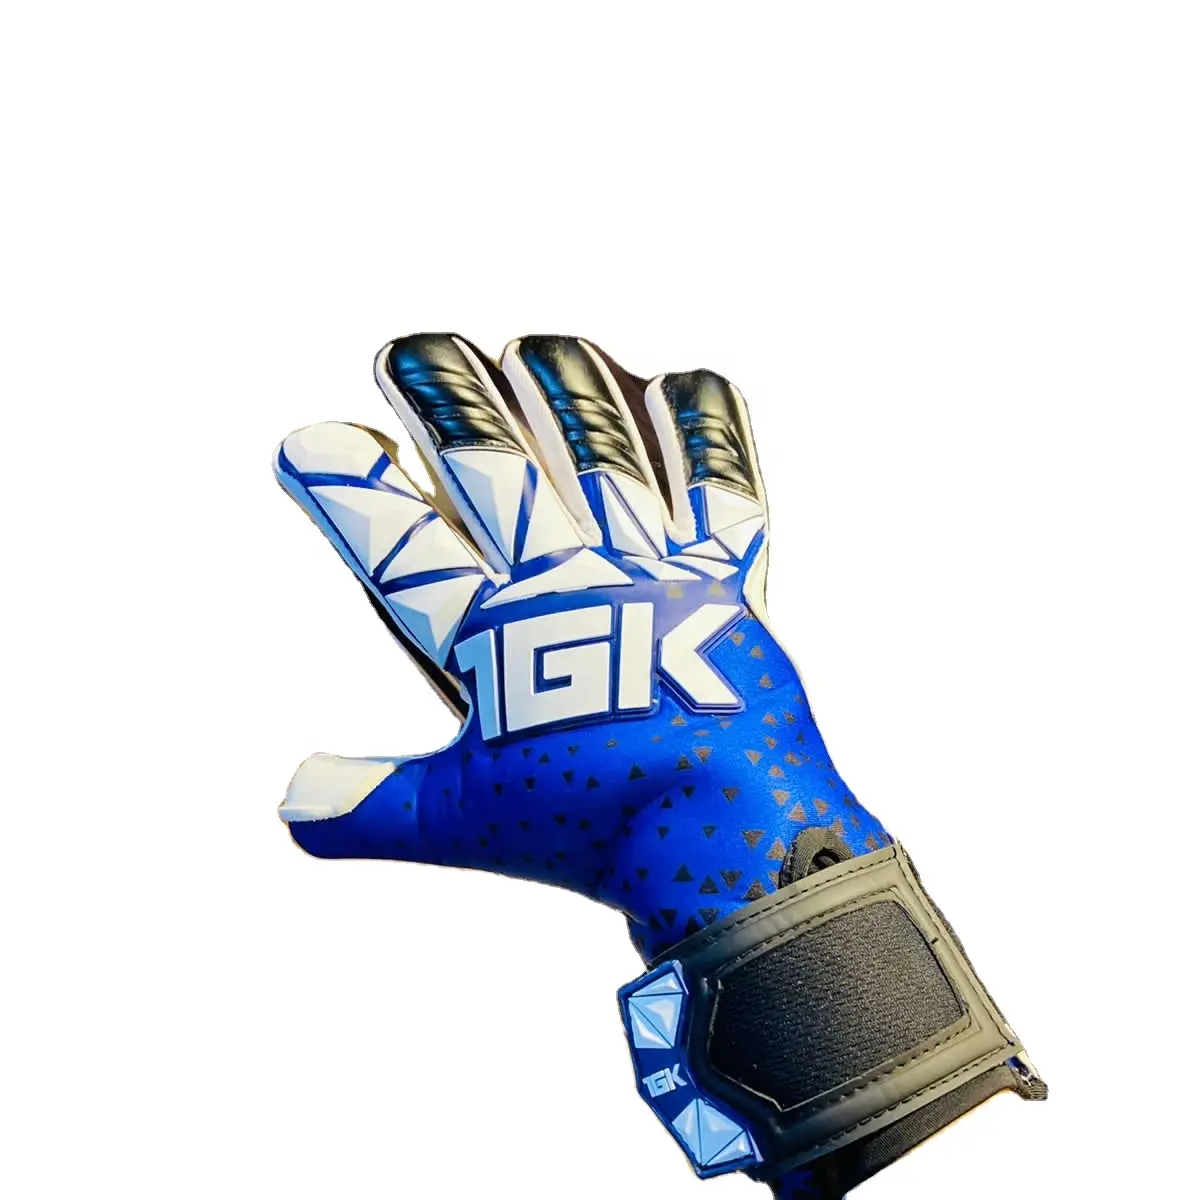 Goalkeeper Gloves Football Sporting Used Custom Goalkeeper Gloves by Leather shield